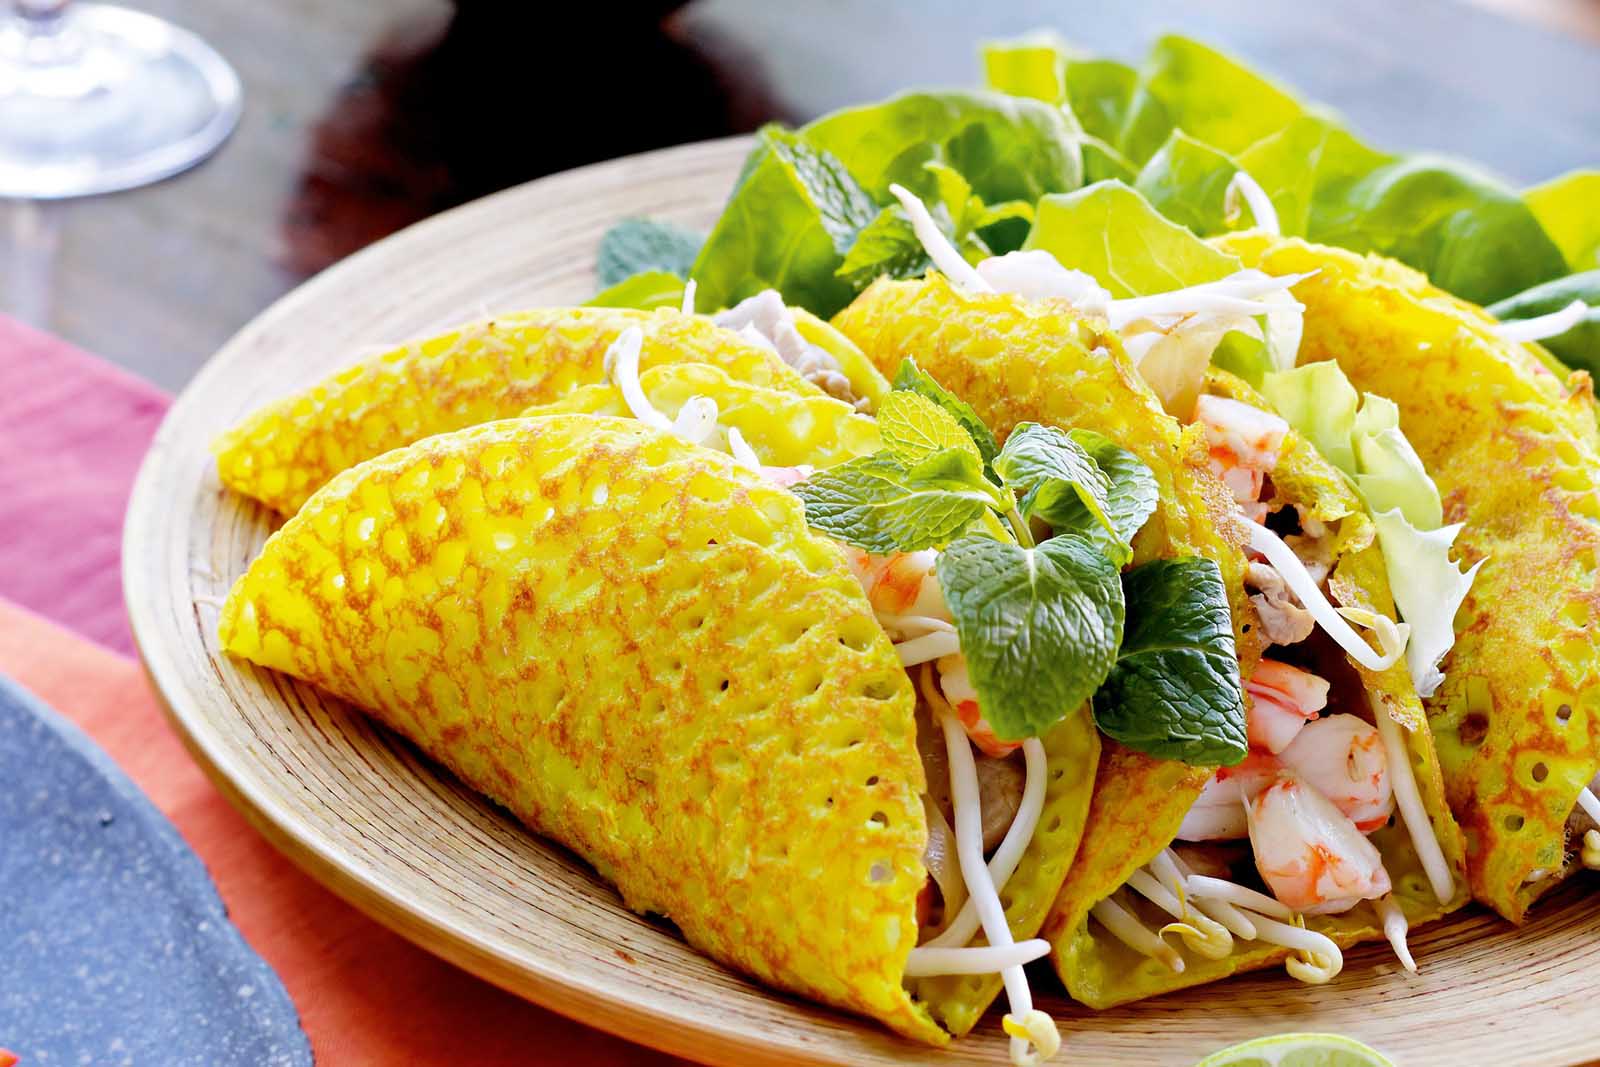 Traditional Vietnamese Food